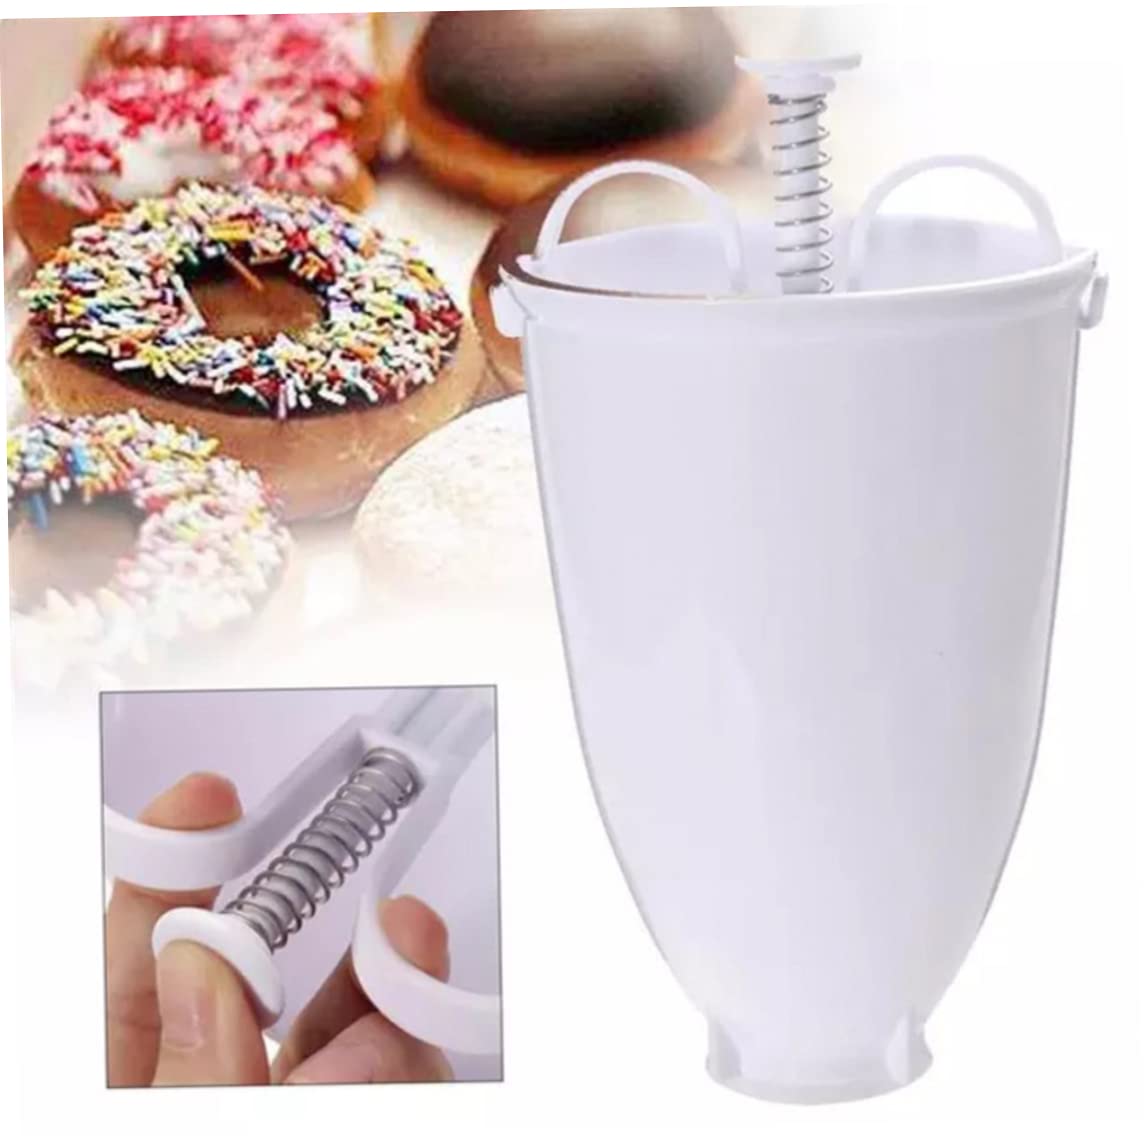 Plastic Donut Maker Manual Doughnut Machine Mold DIY Baking Tools for Kitchen Pastry Making Plastic Maker